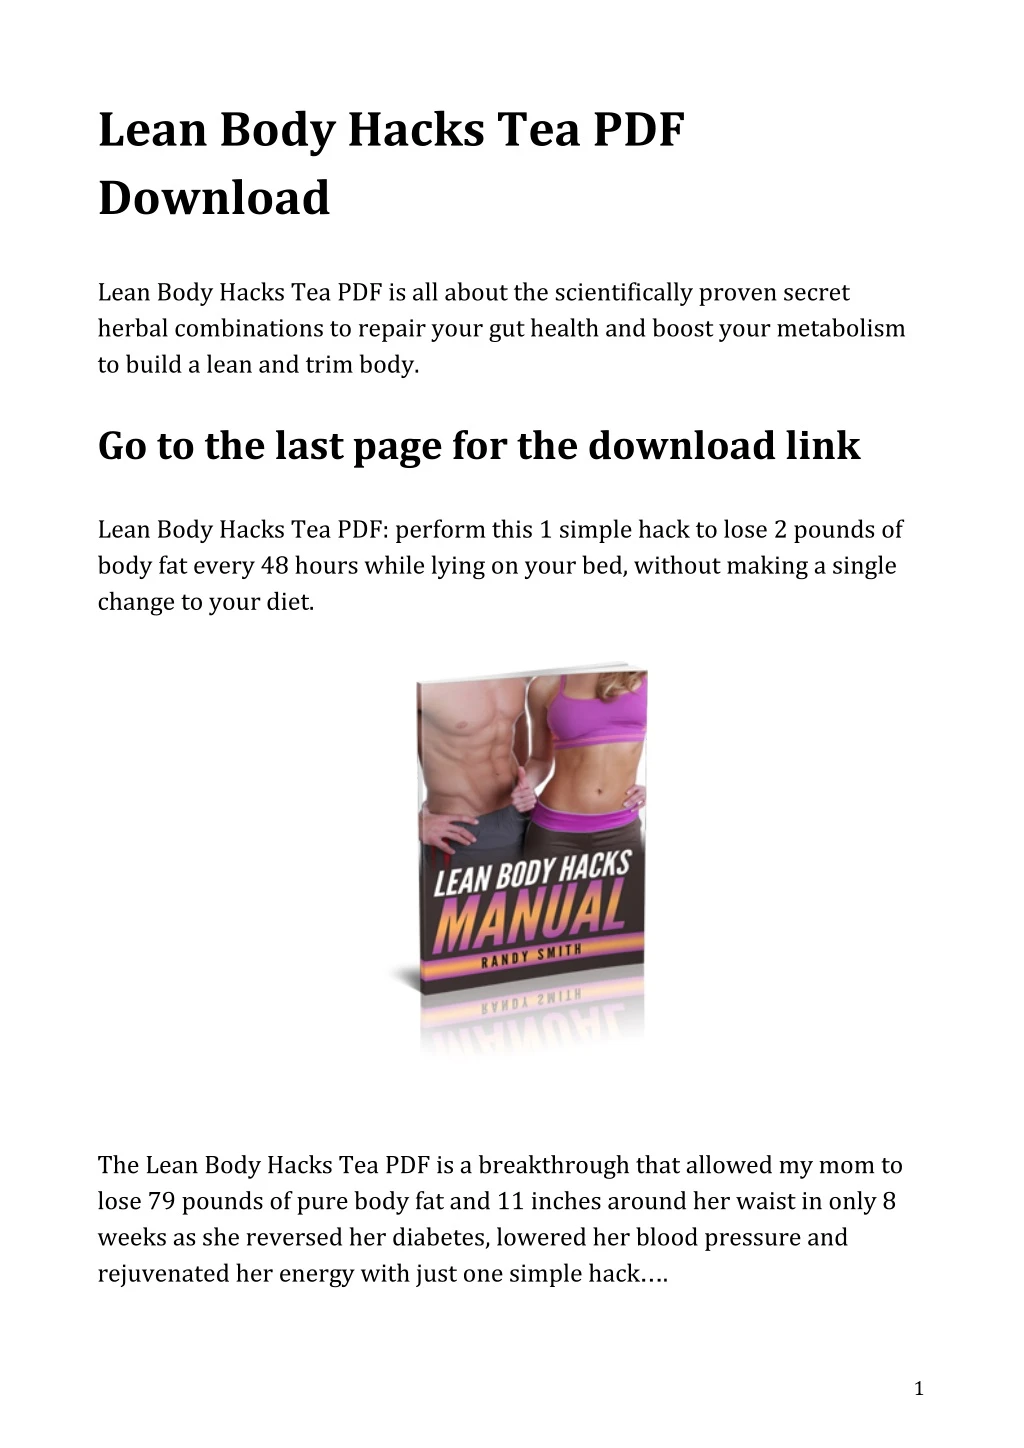 lean body hacks tea pdf download